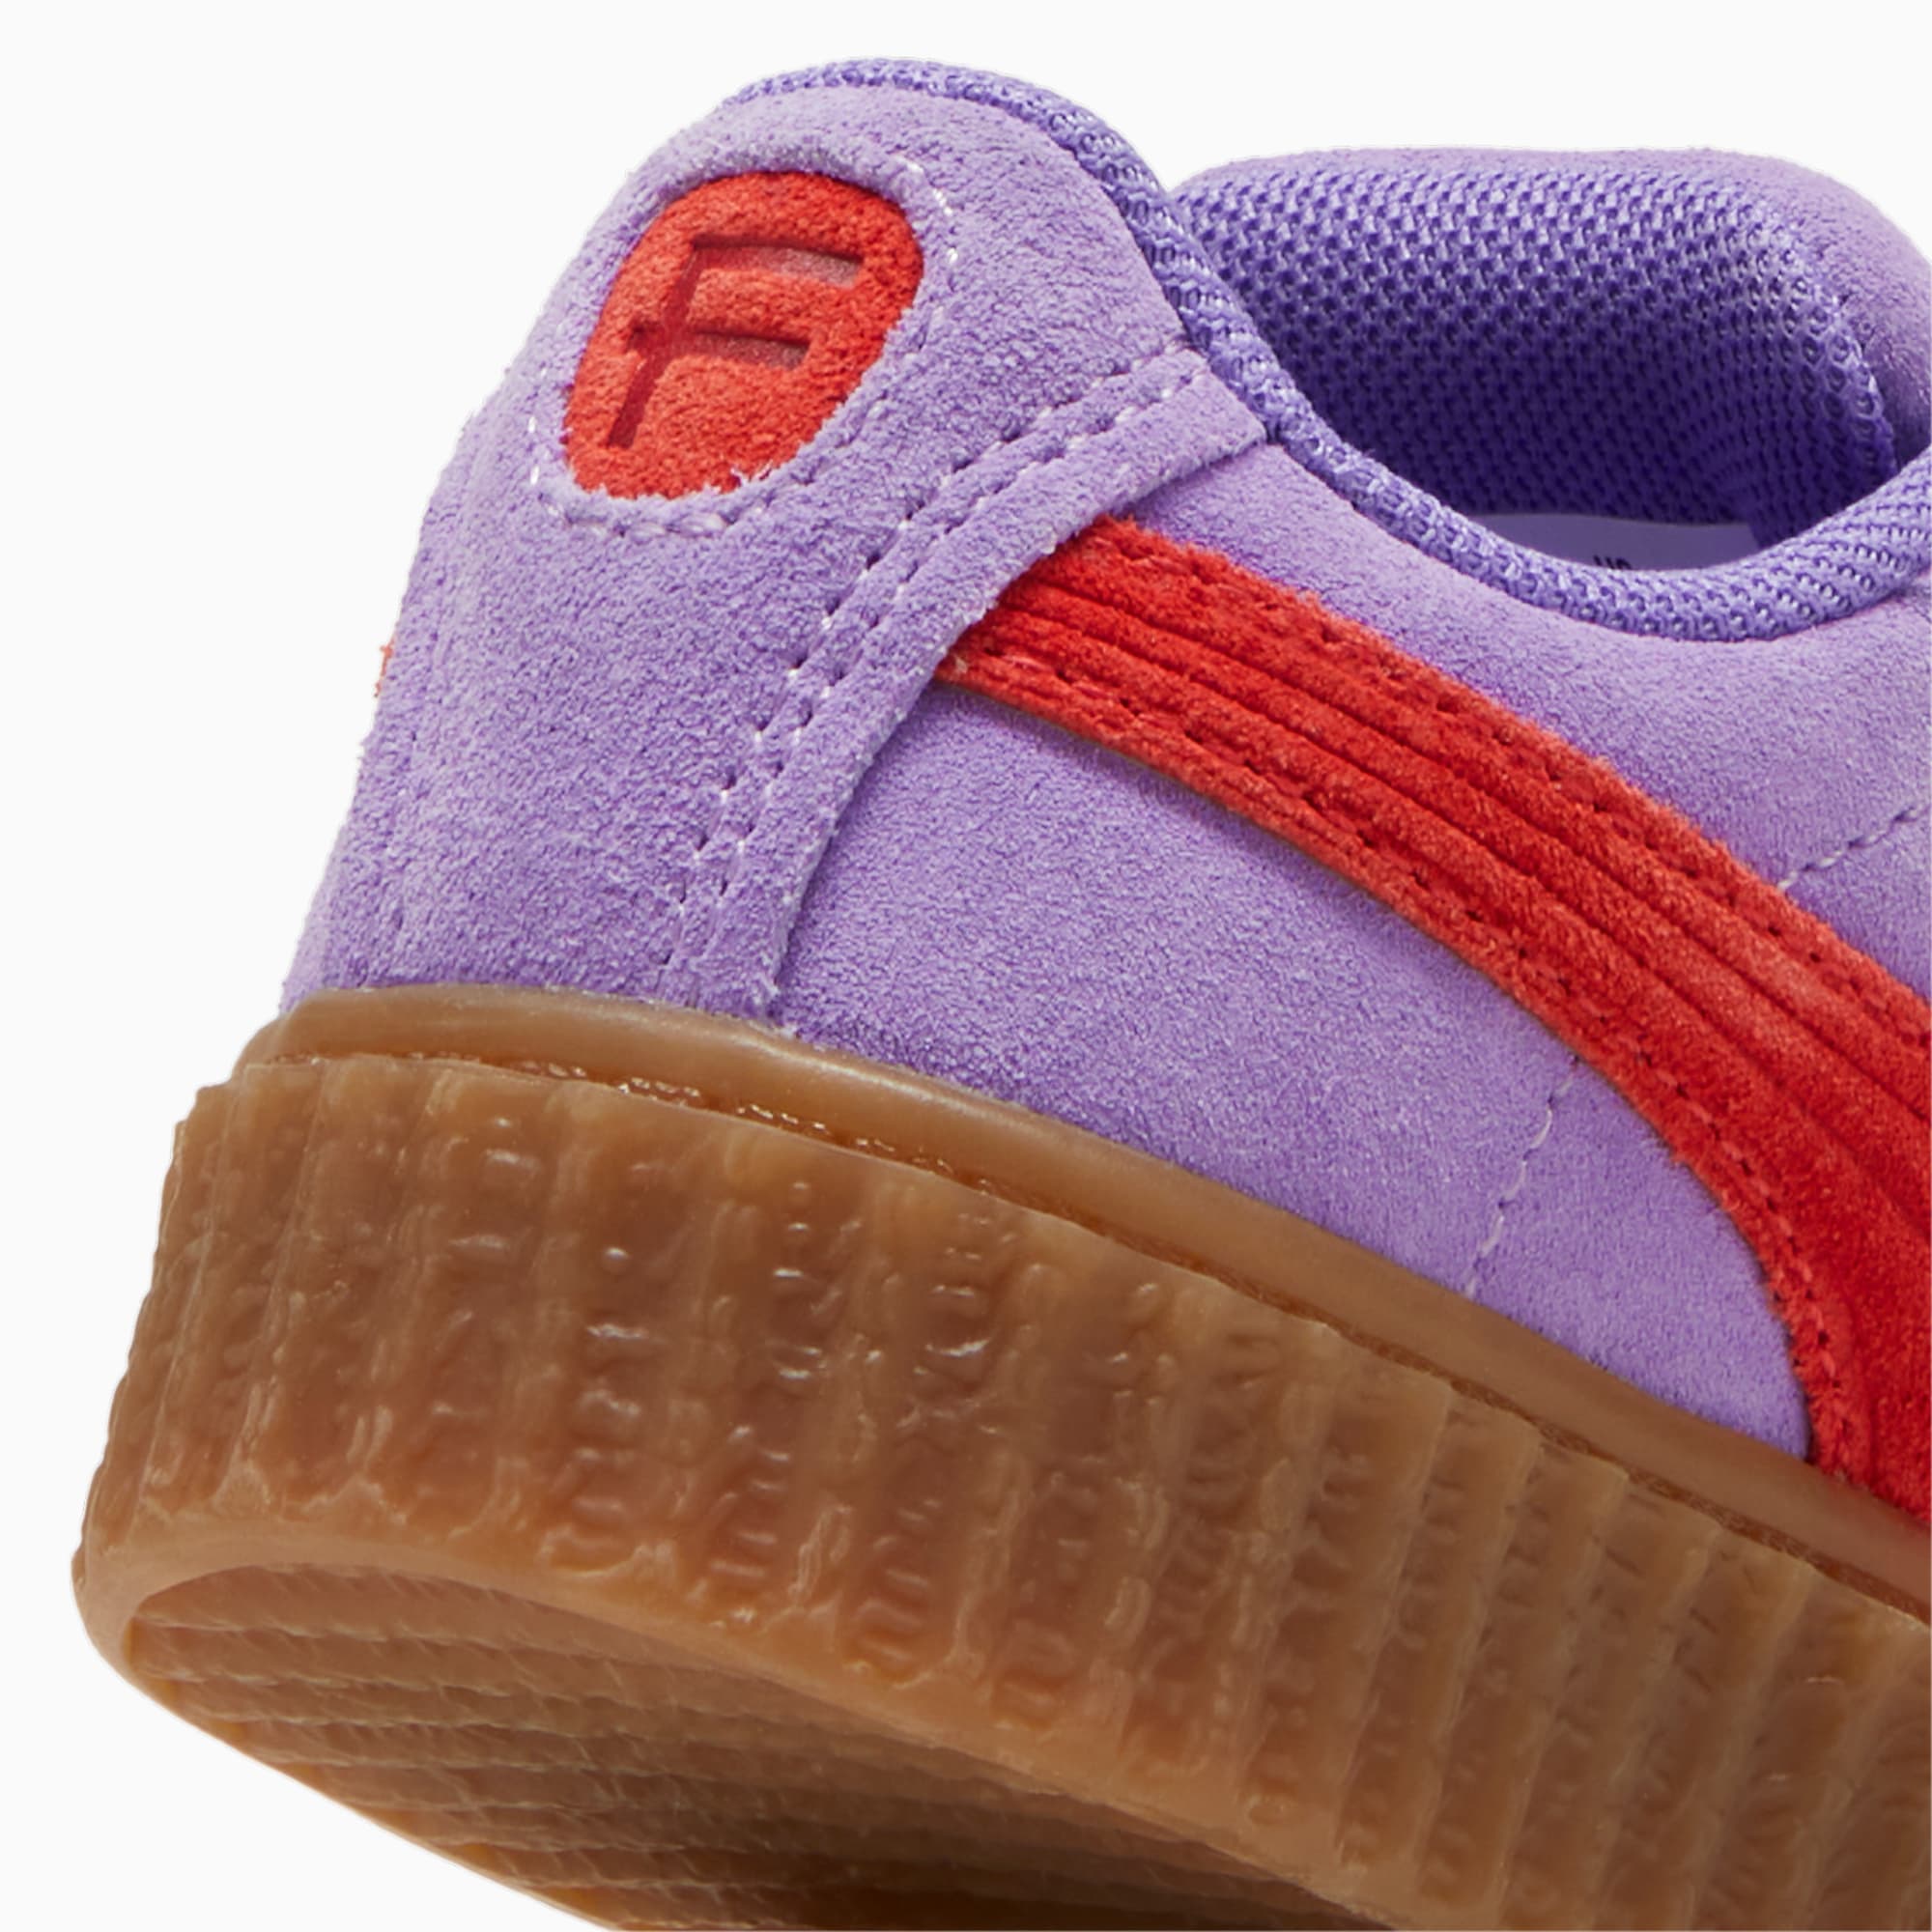 Fenty X PUMA Creeper Phatty Unisex Toddler Sneakers, Lavender Alert/Burnt Red/Gum, Size 19, Accessories